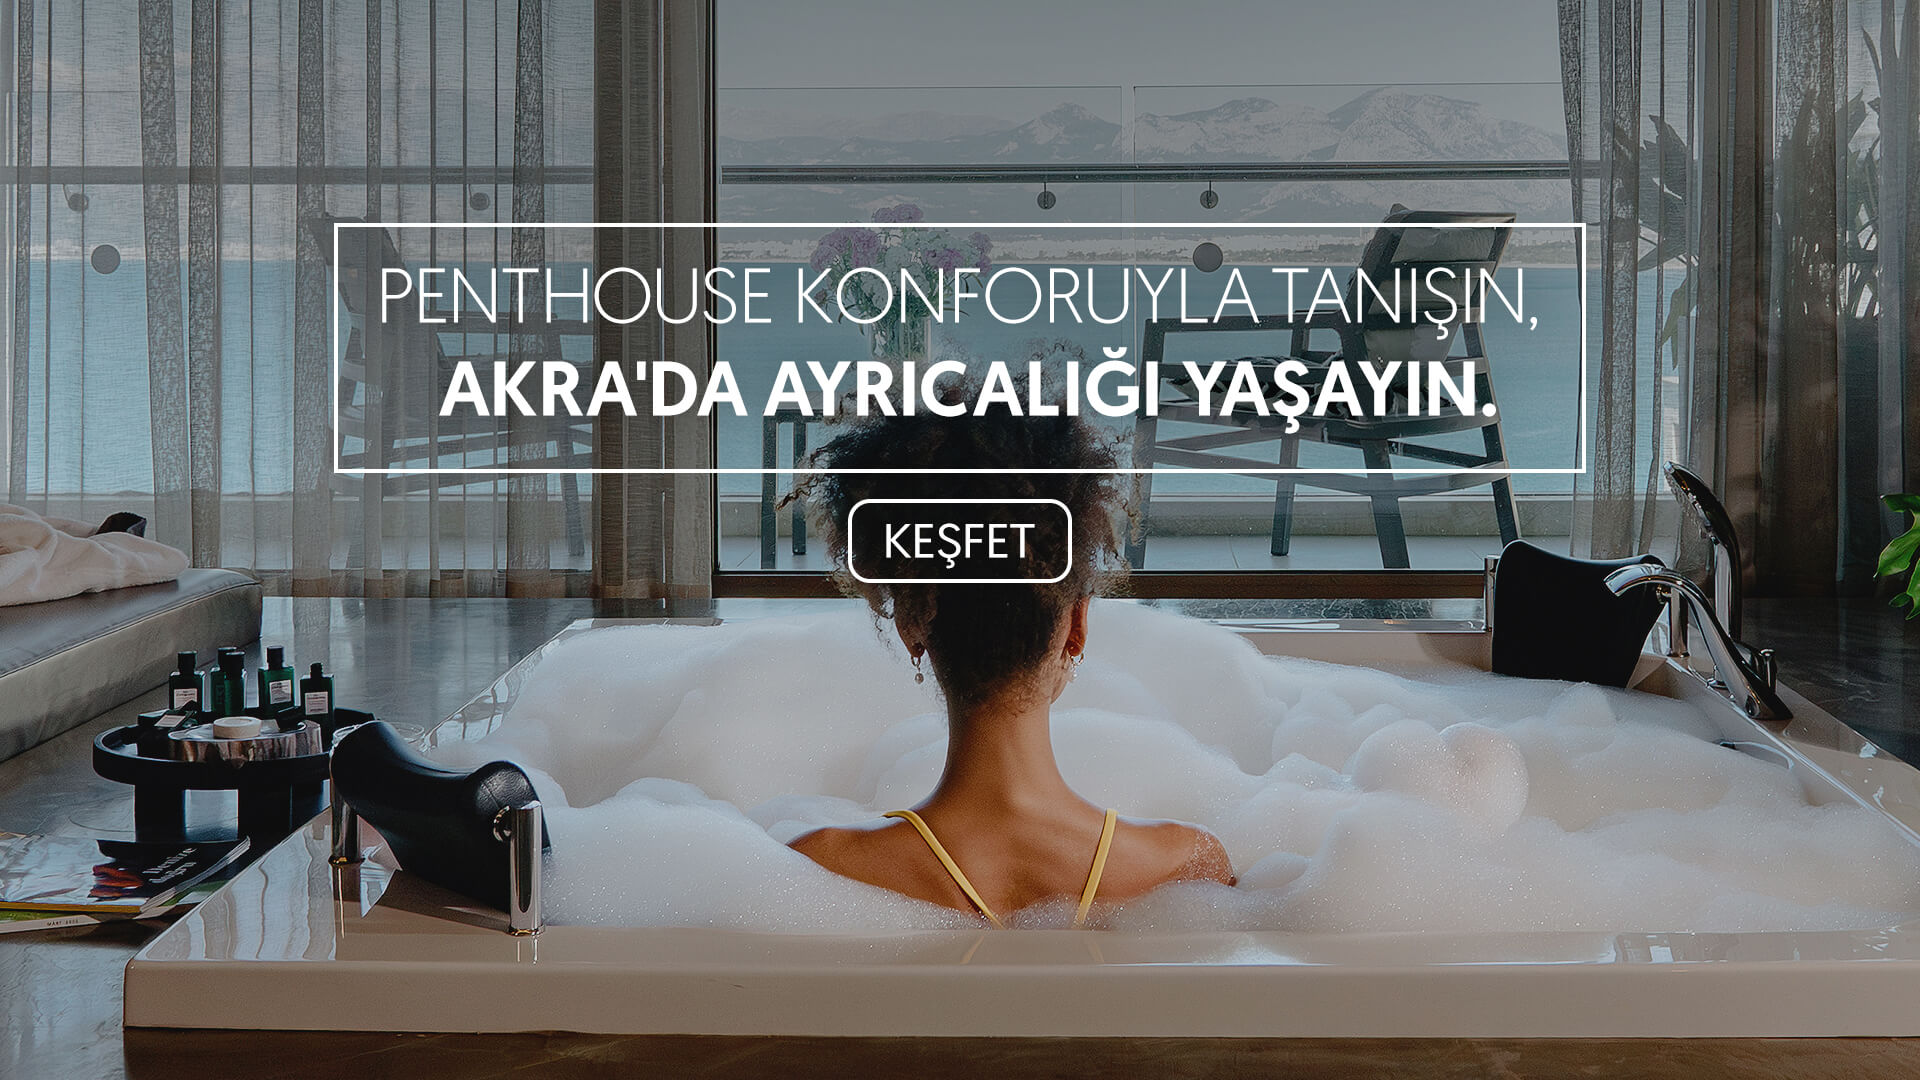 Akra Hotel Anasayfa Penthouse Banner Tr